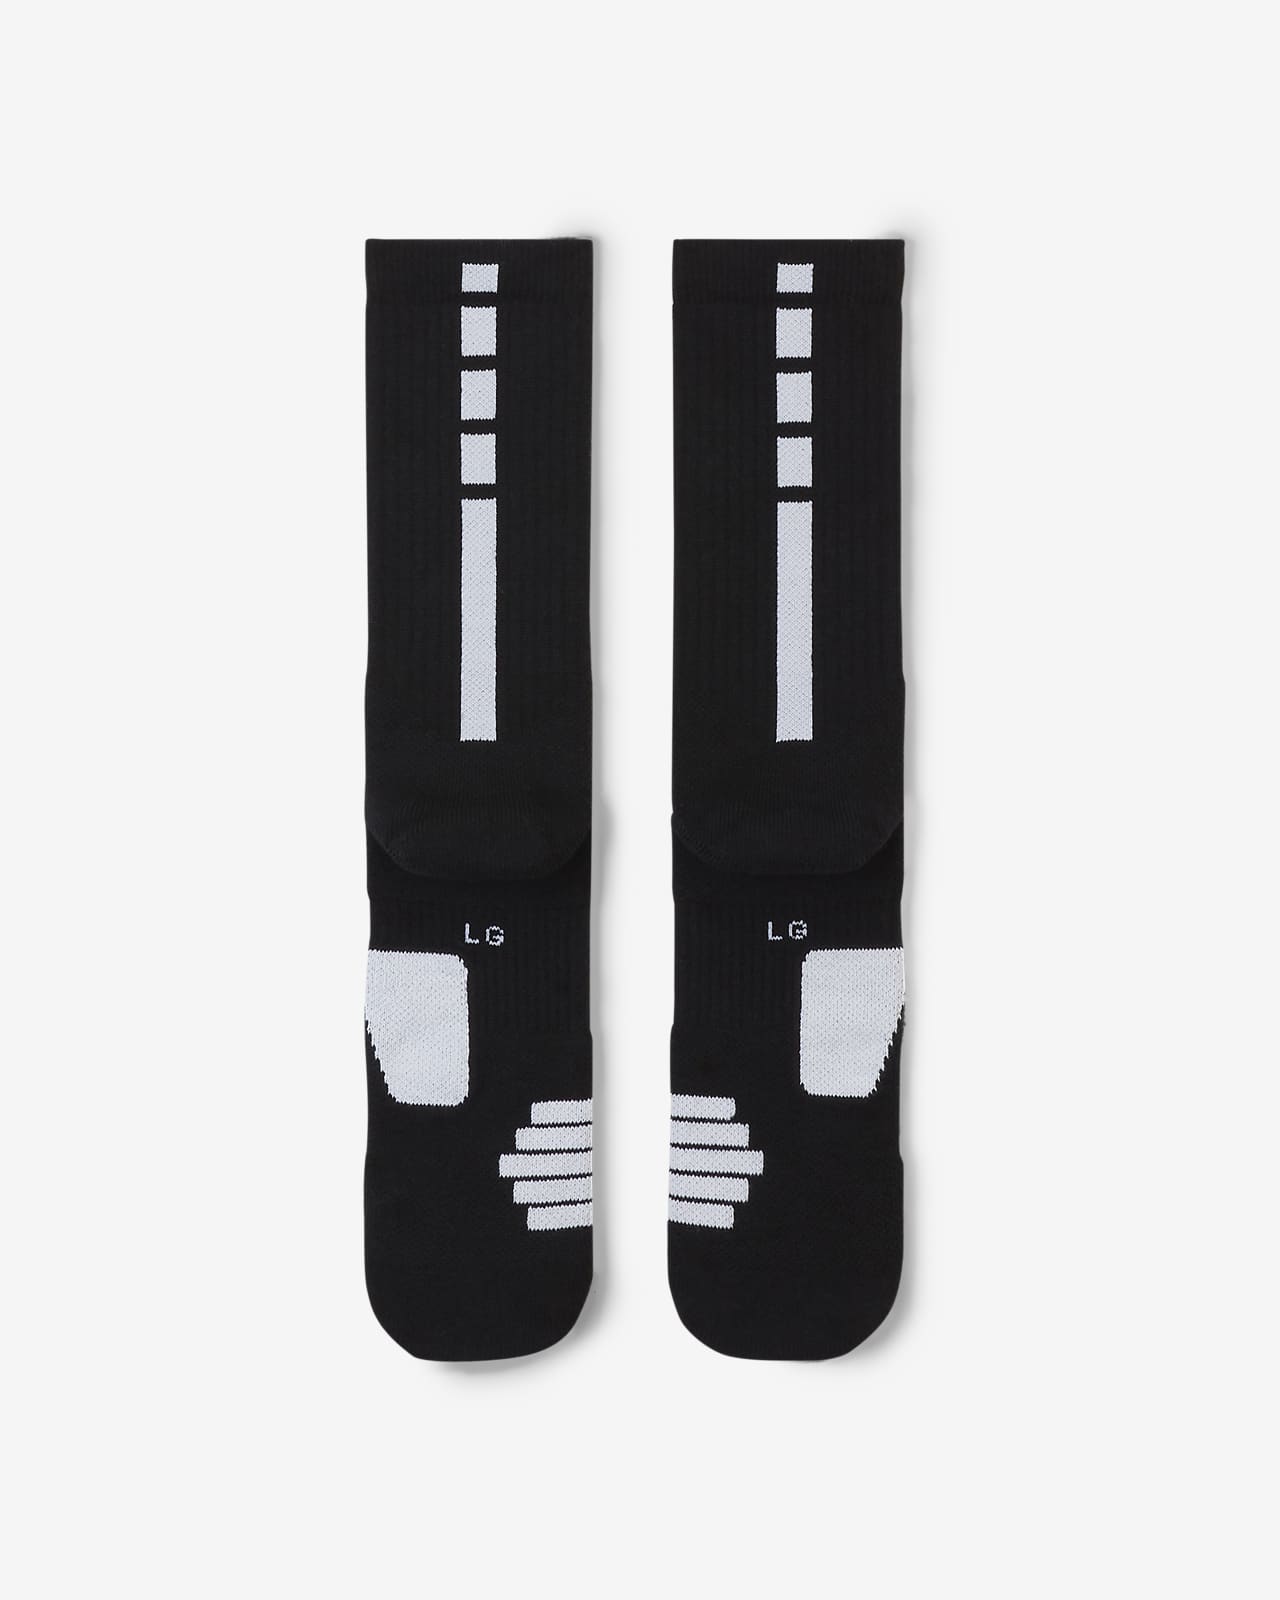 Nike NBA Power Grip Socks  Grip socks, Nike elite socks, Black nike socks